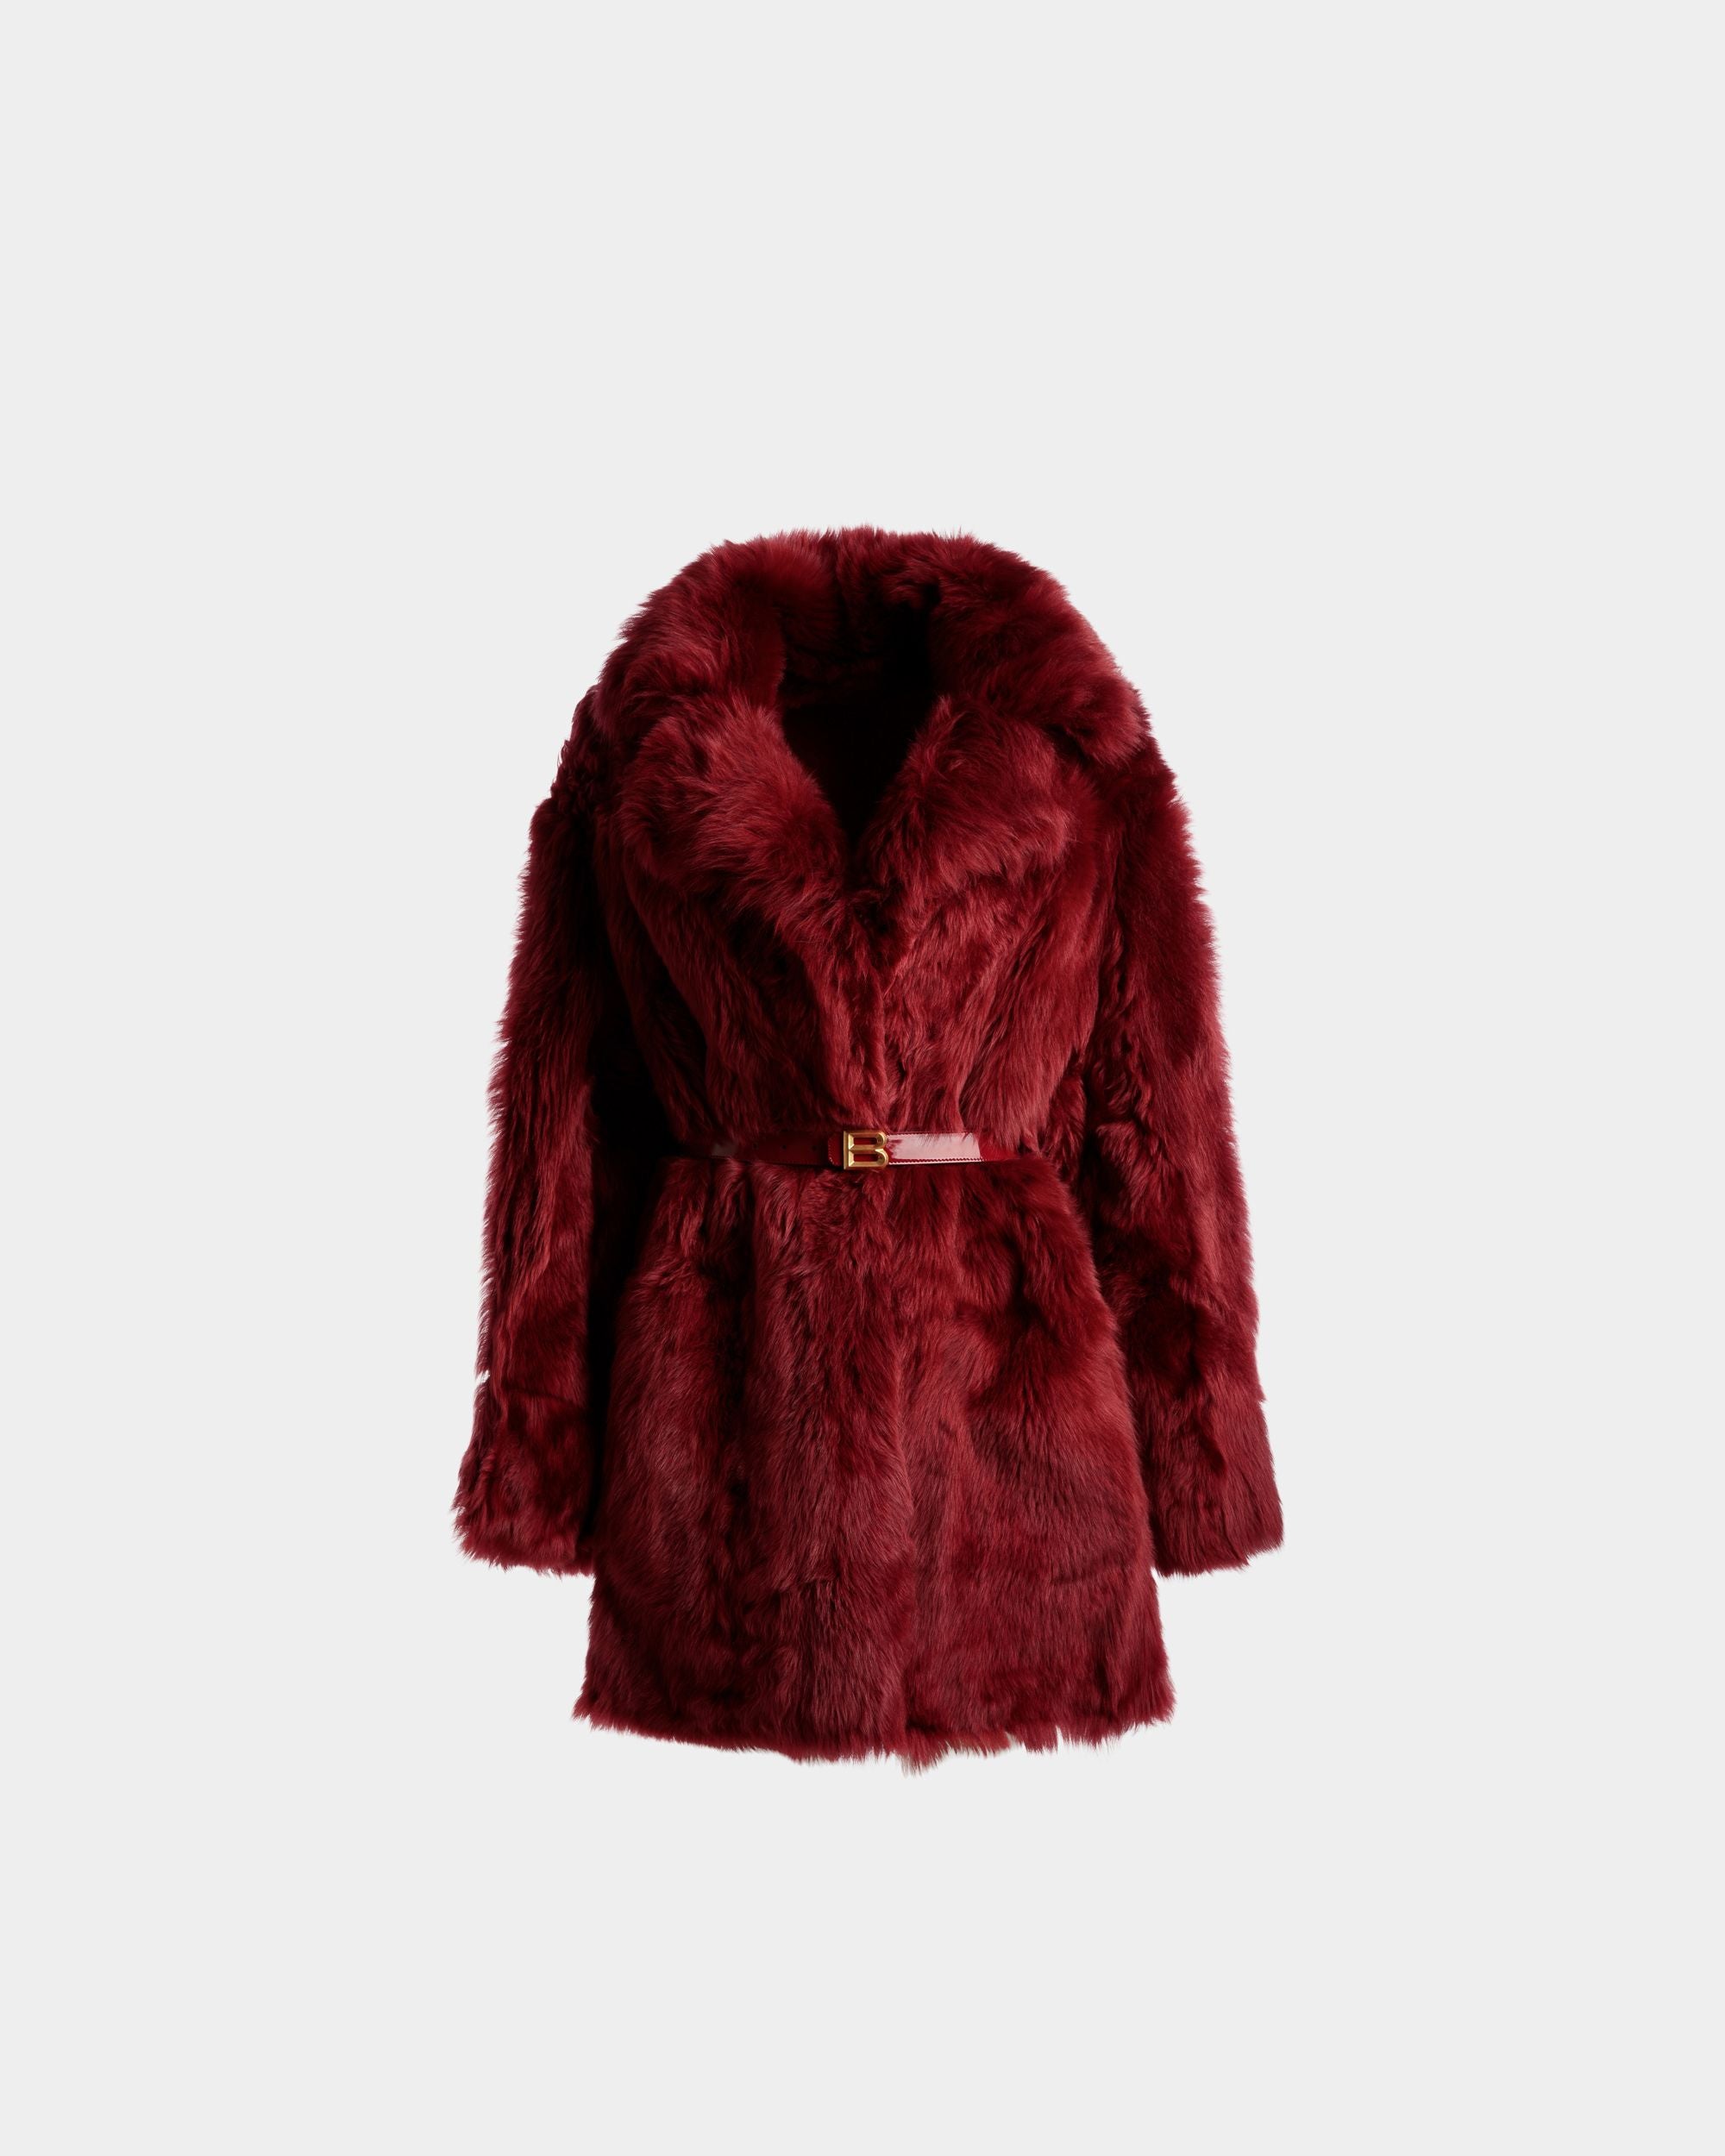 Velor Coat | Women's Coat | Red Leather | Bally | Still Life Front